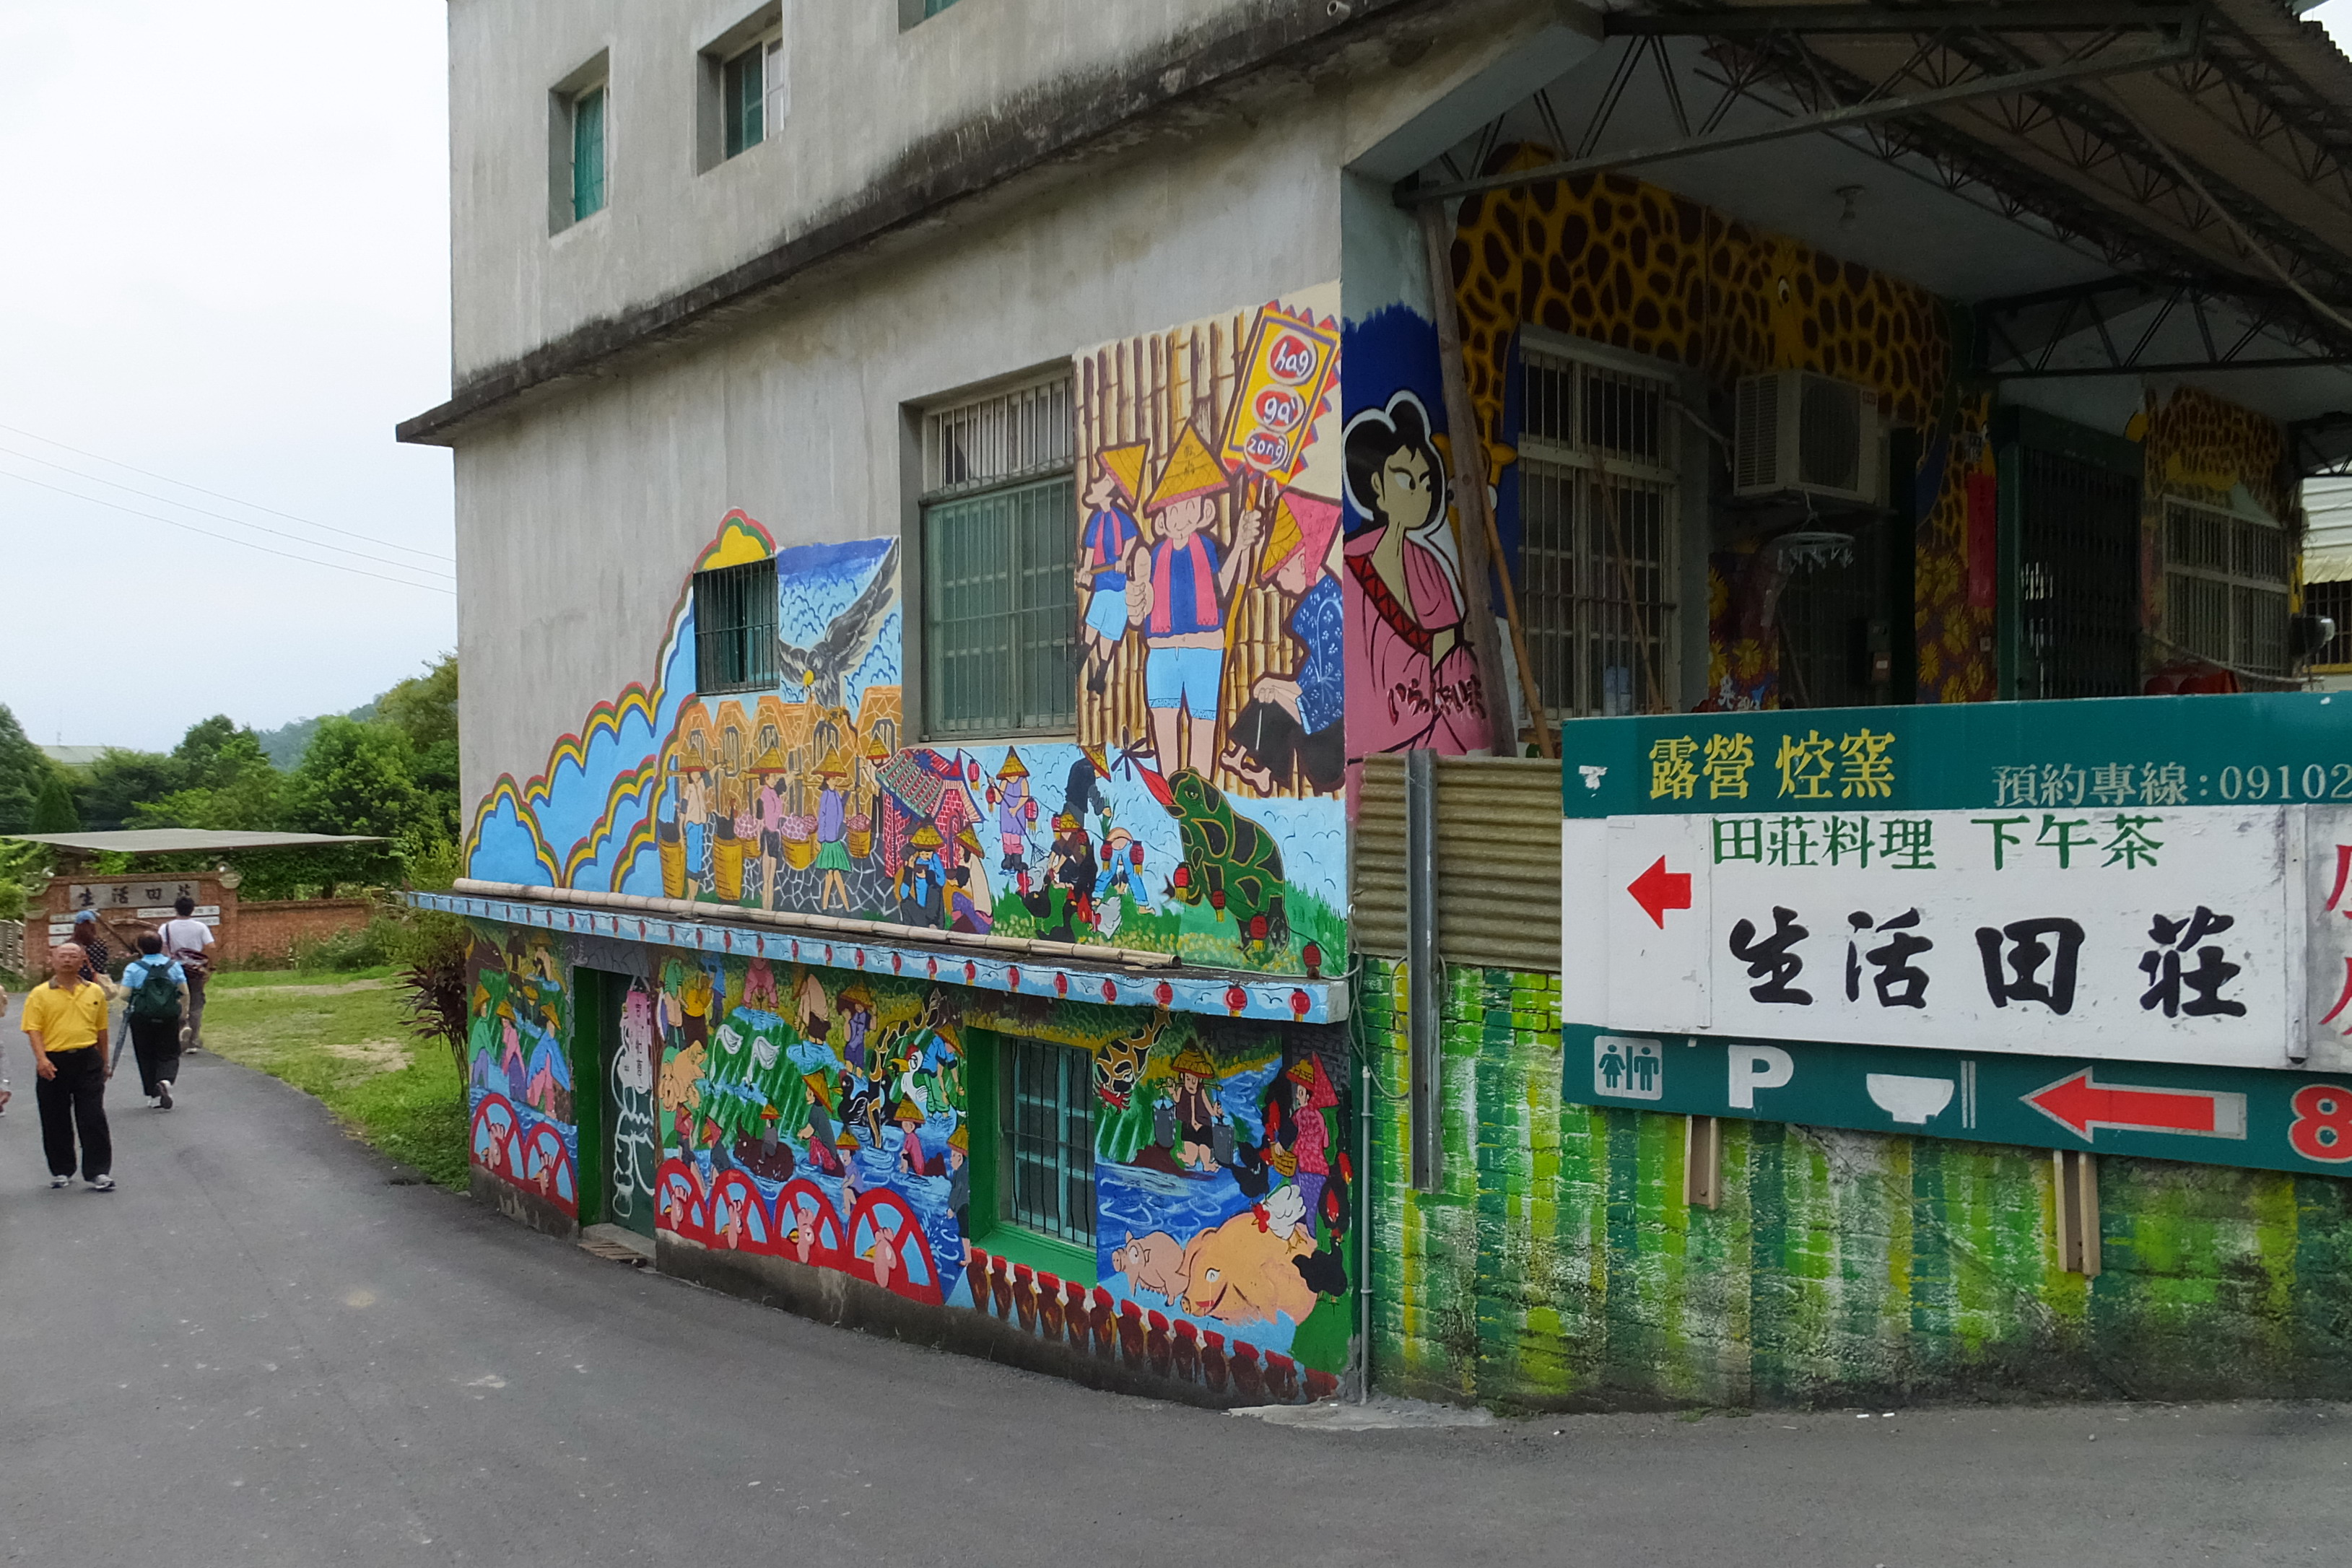 File:軟橋彩繪村 Ruanqiao Painted Village - panoramio.jpg - Wikimedia ...